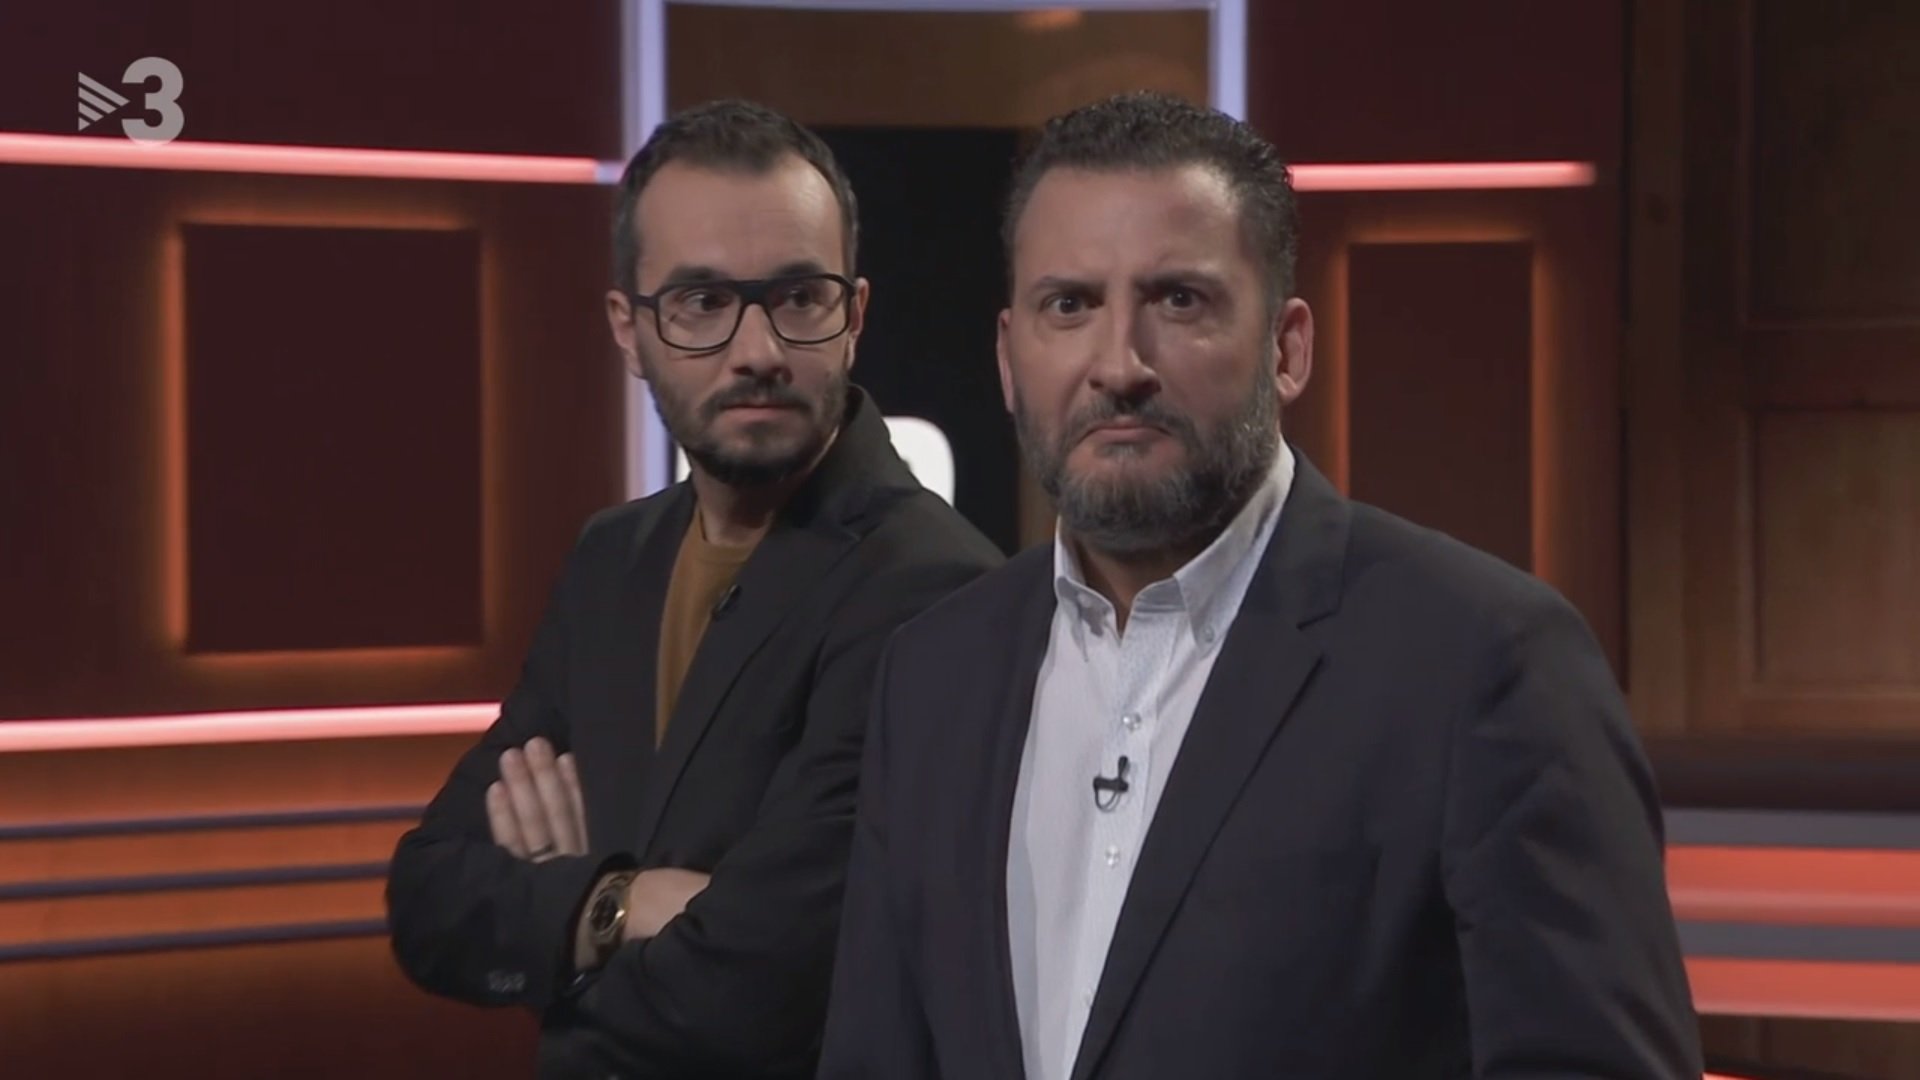 La broma de TV3 amb Carrero Blanco